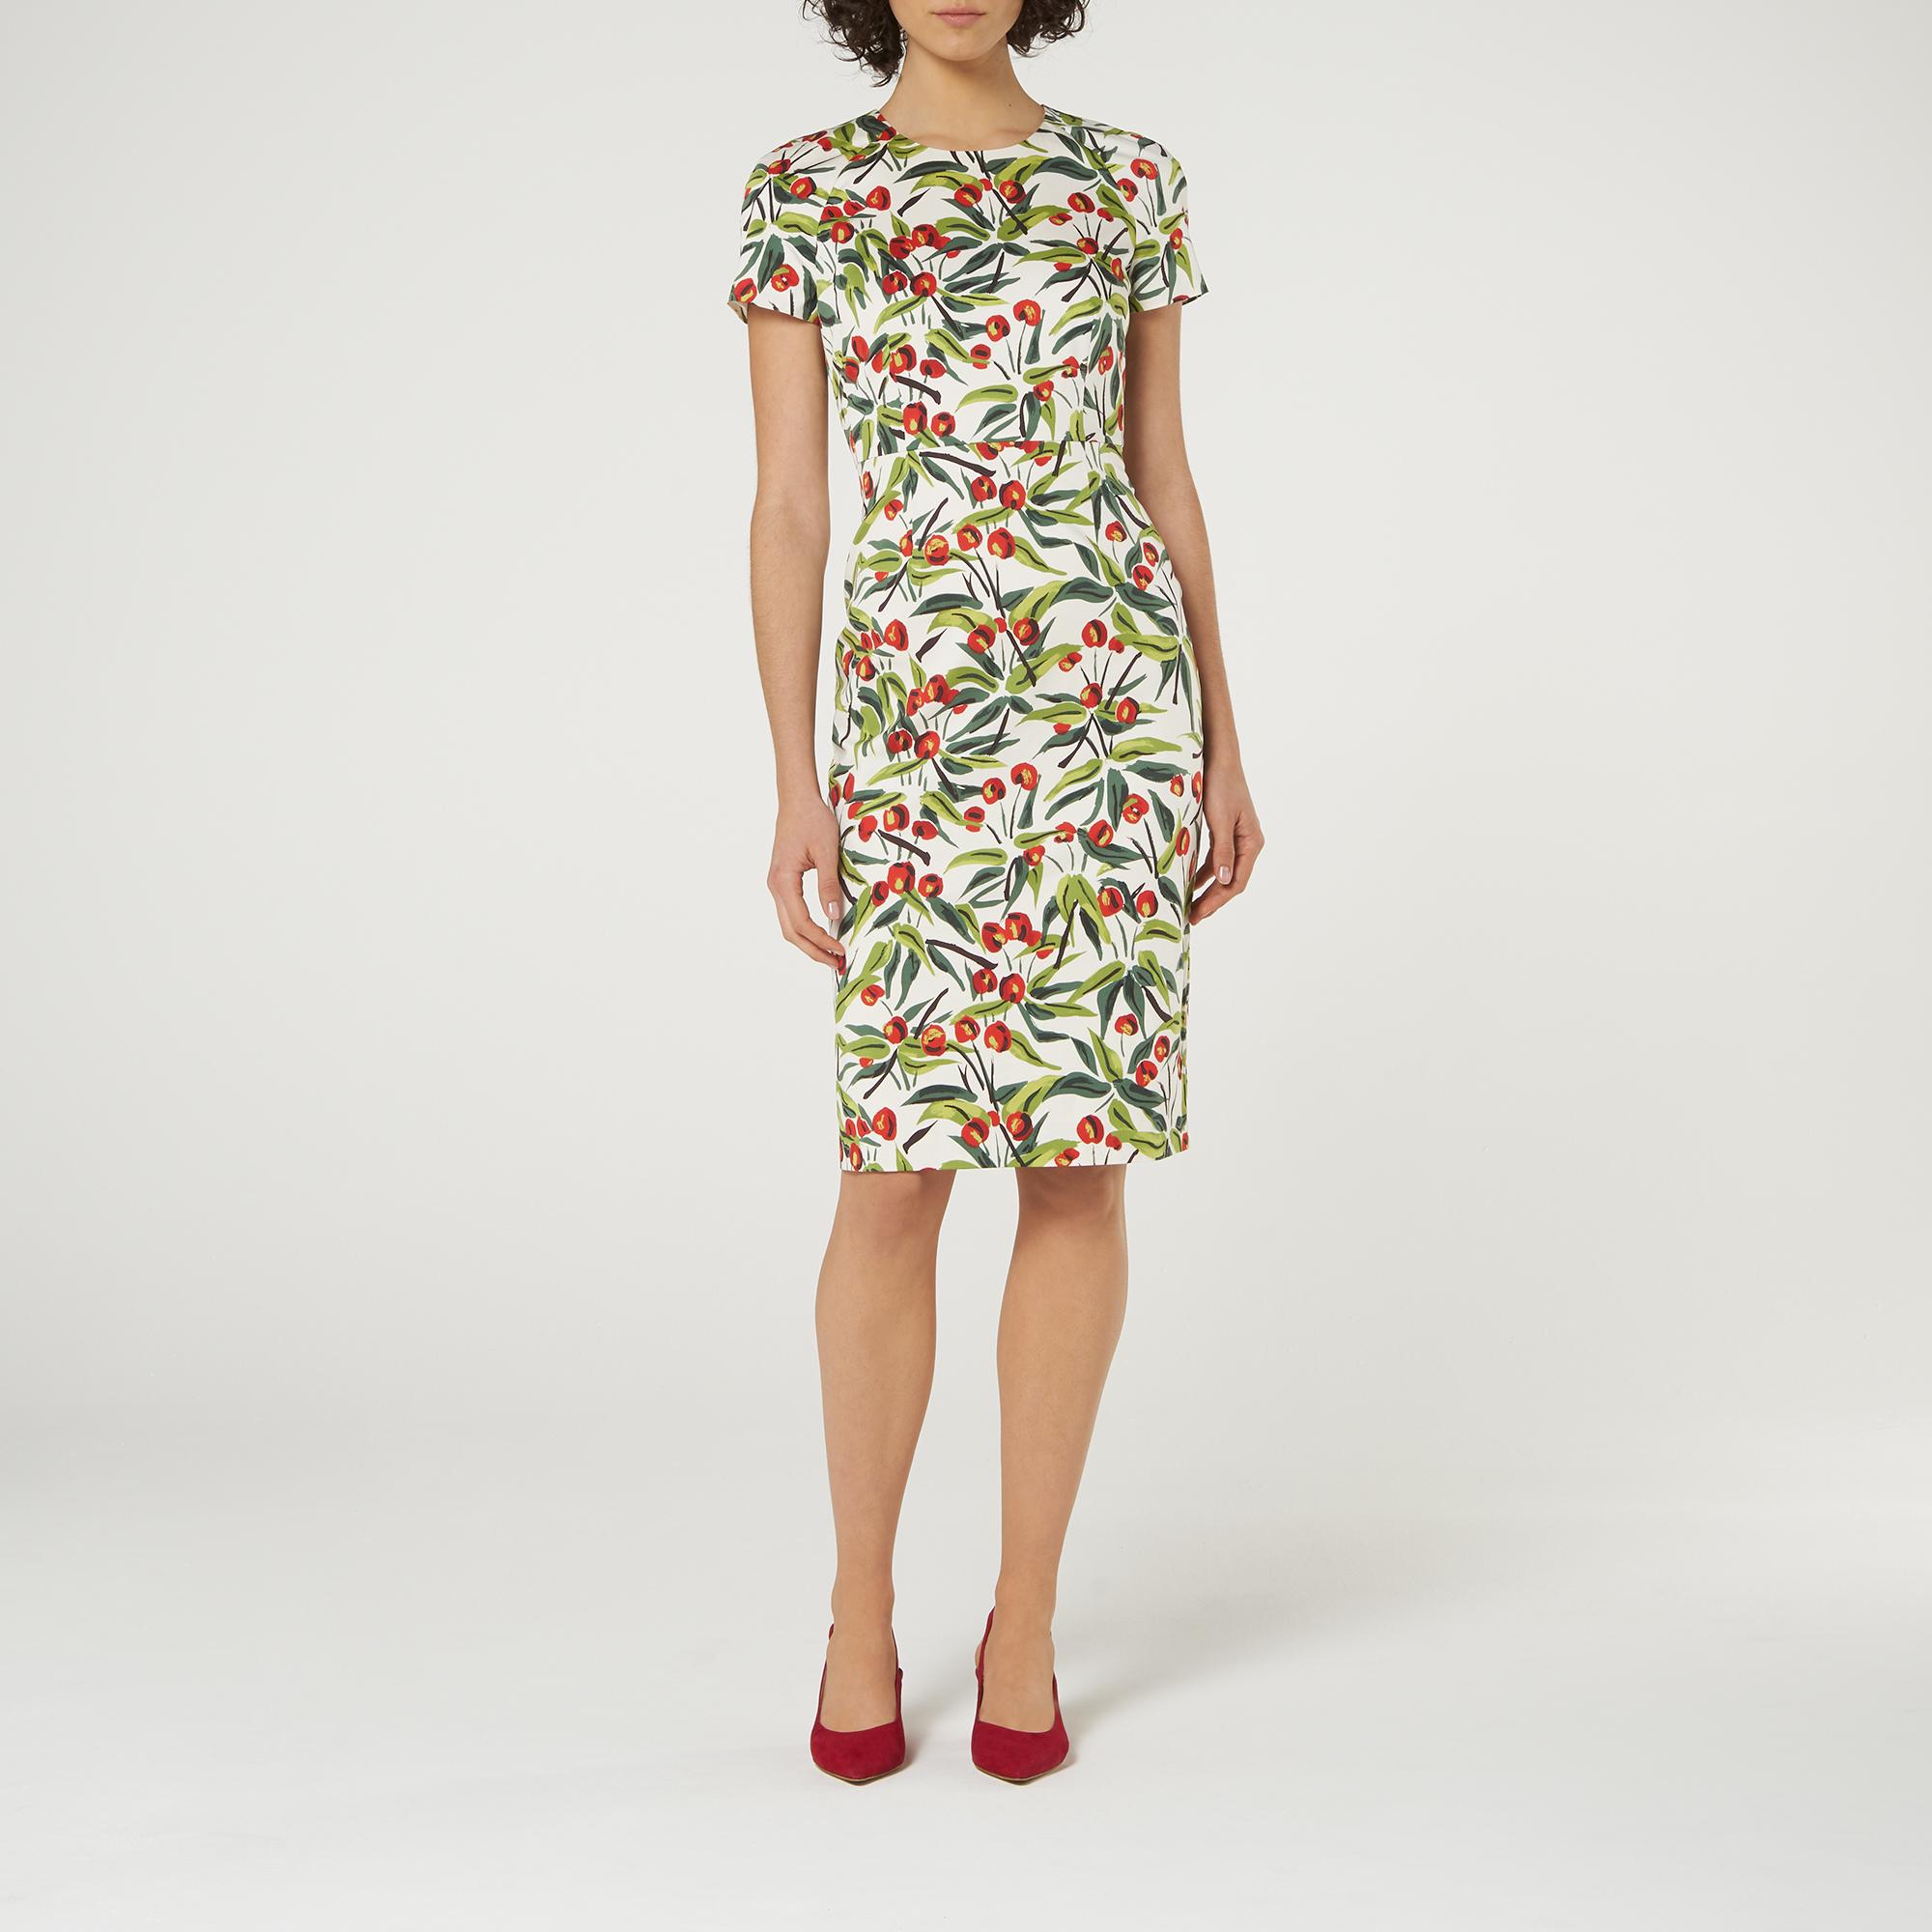 L.K.Bennett Susie Cherry Print Shift Dress | eBay